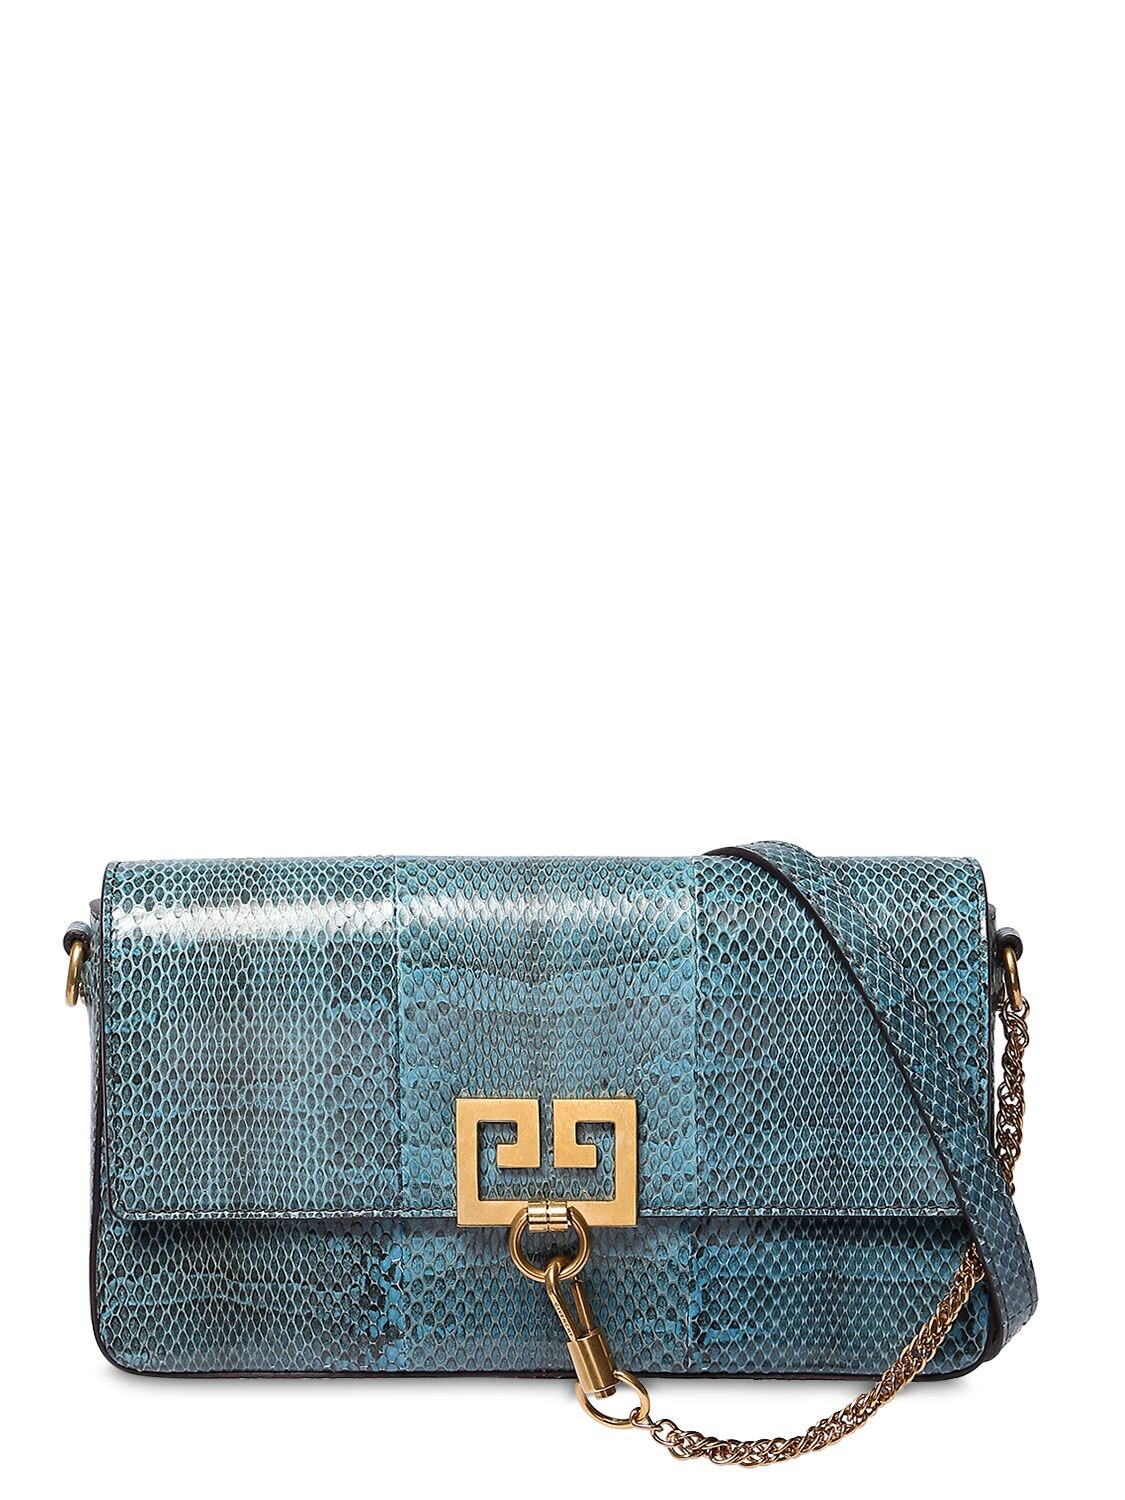 Givenchy Charm Small Snake Shoulder Bag In Blue